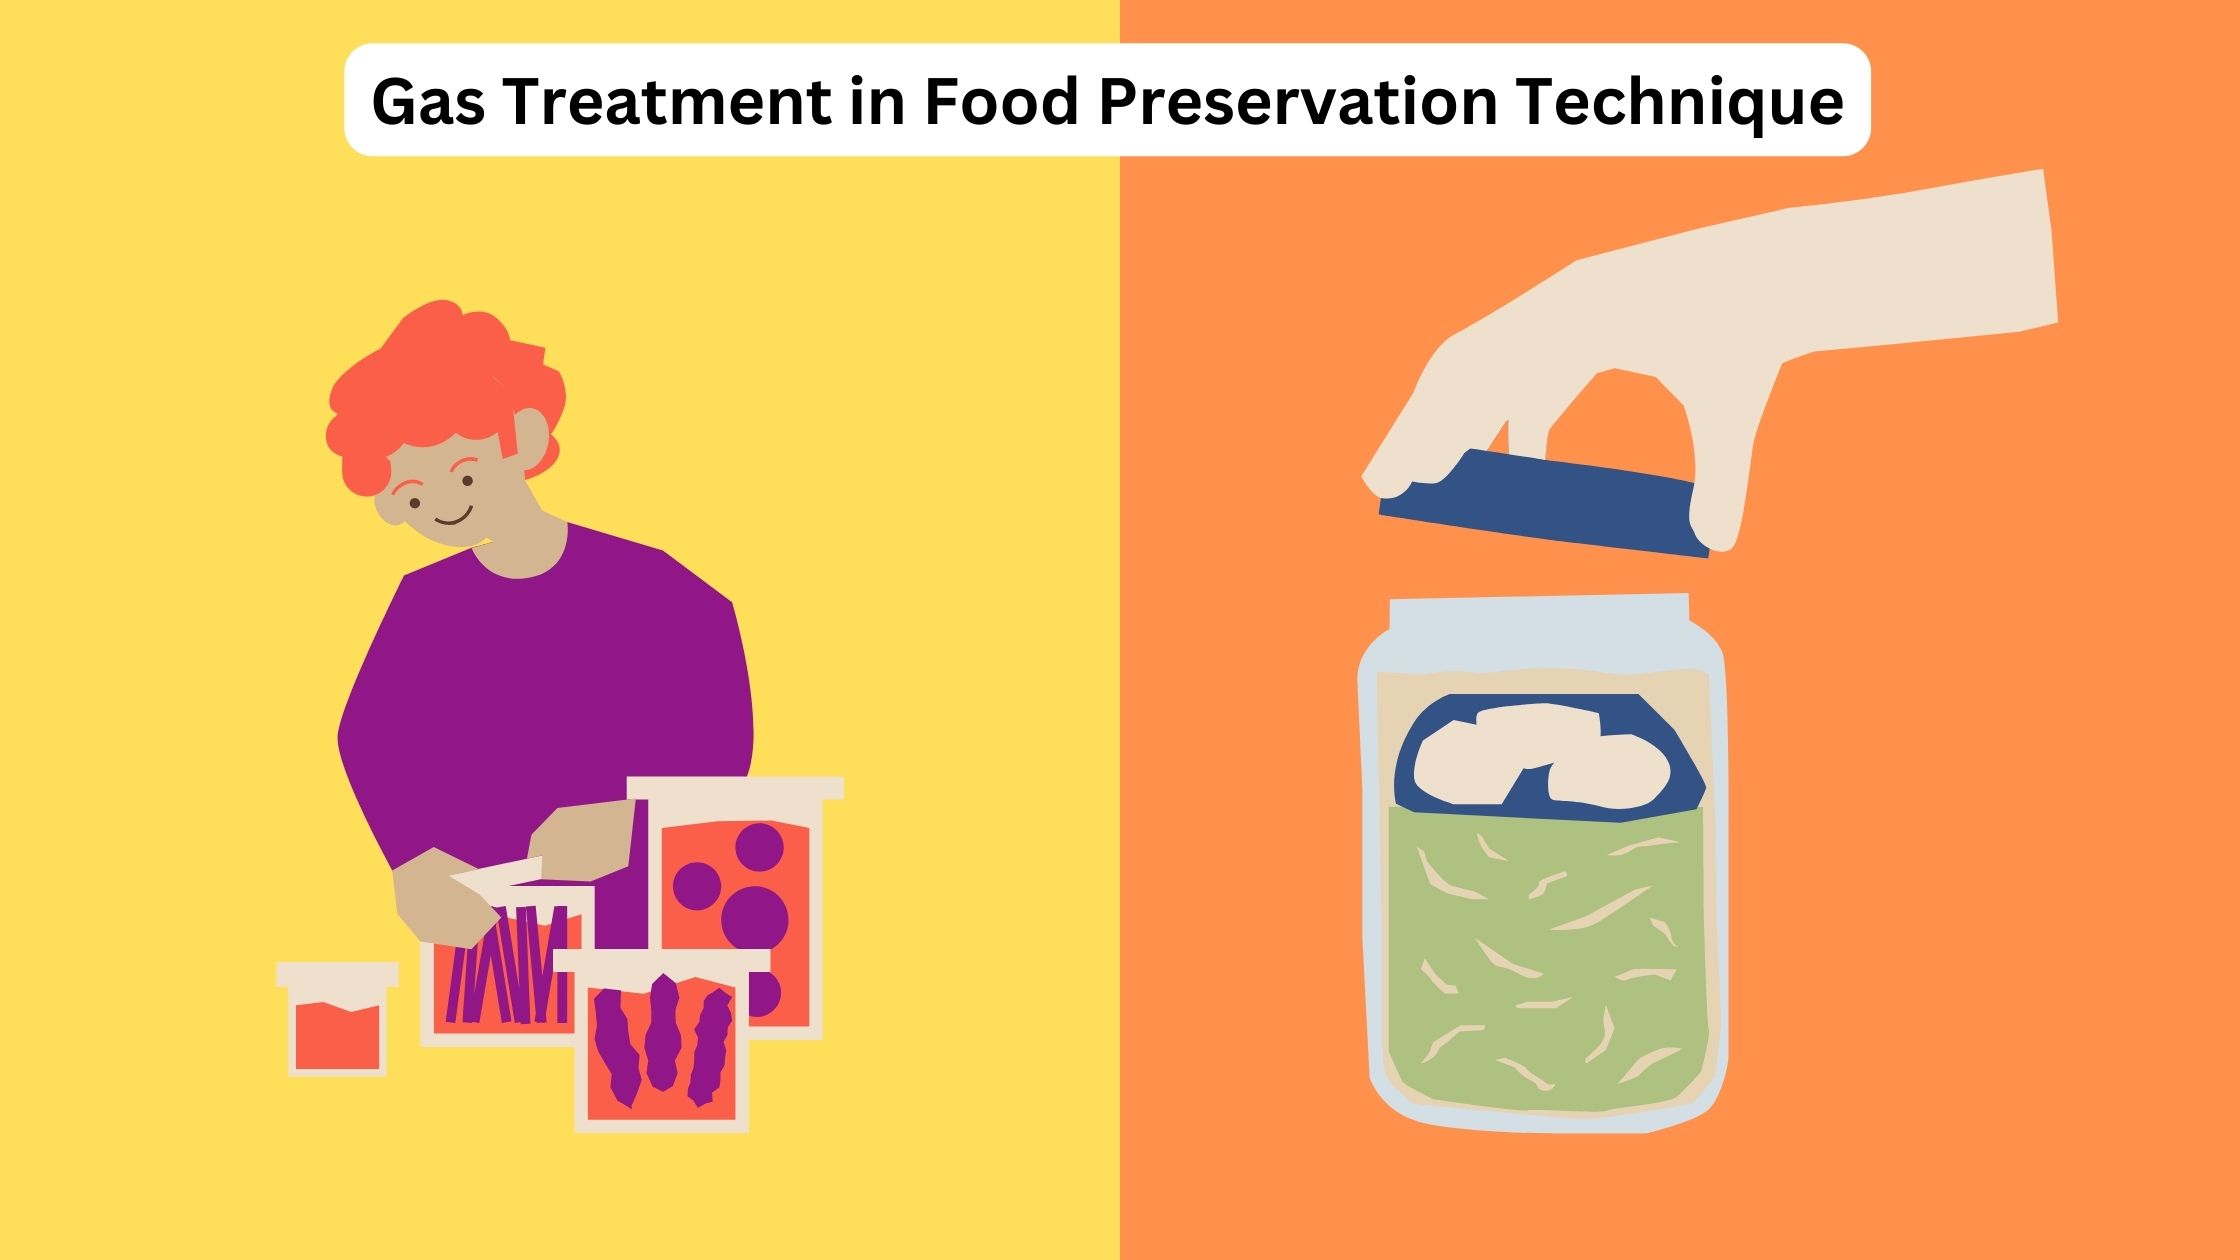 Gas Treatment as a Food Preservation Technique